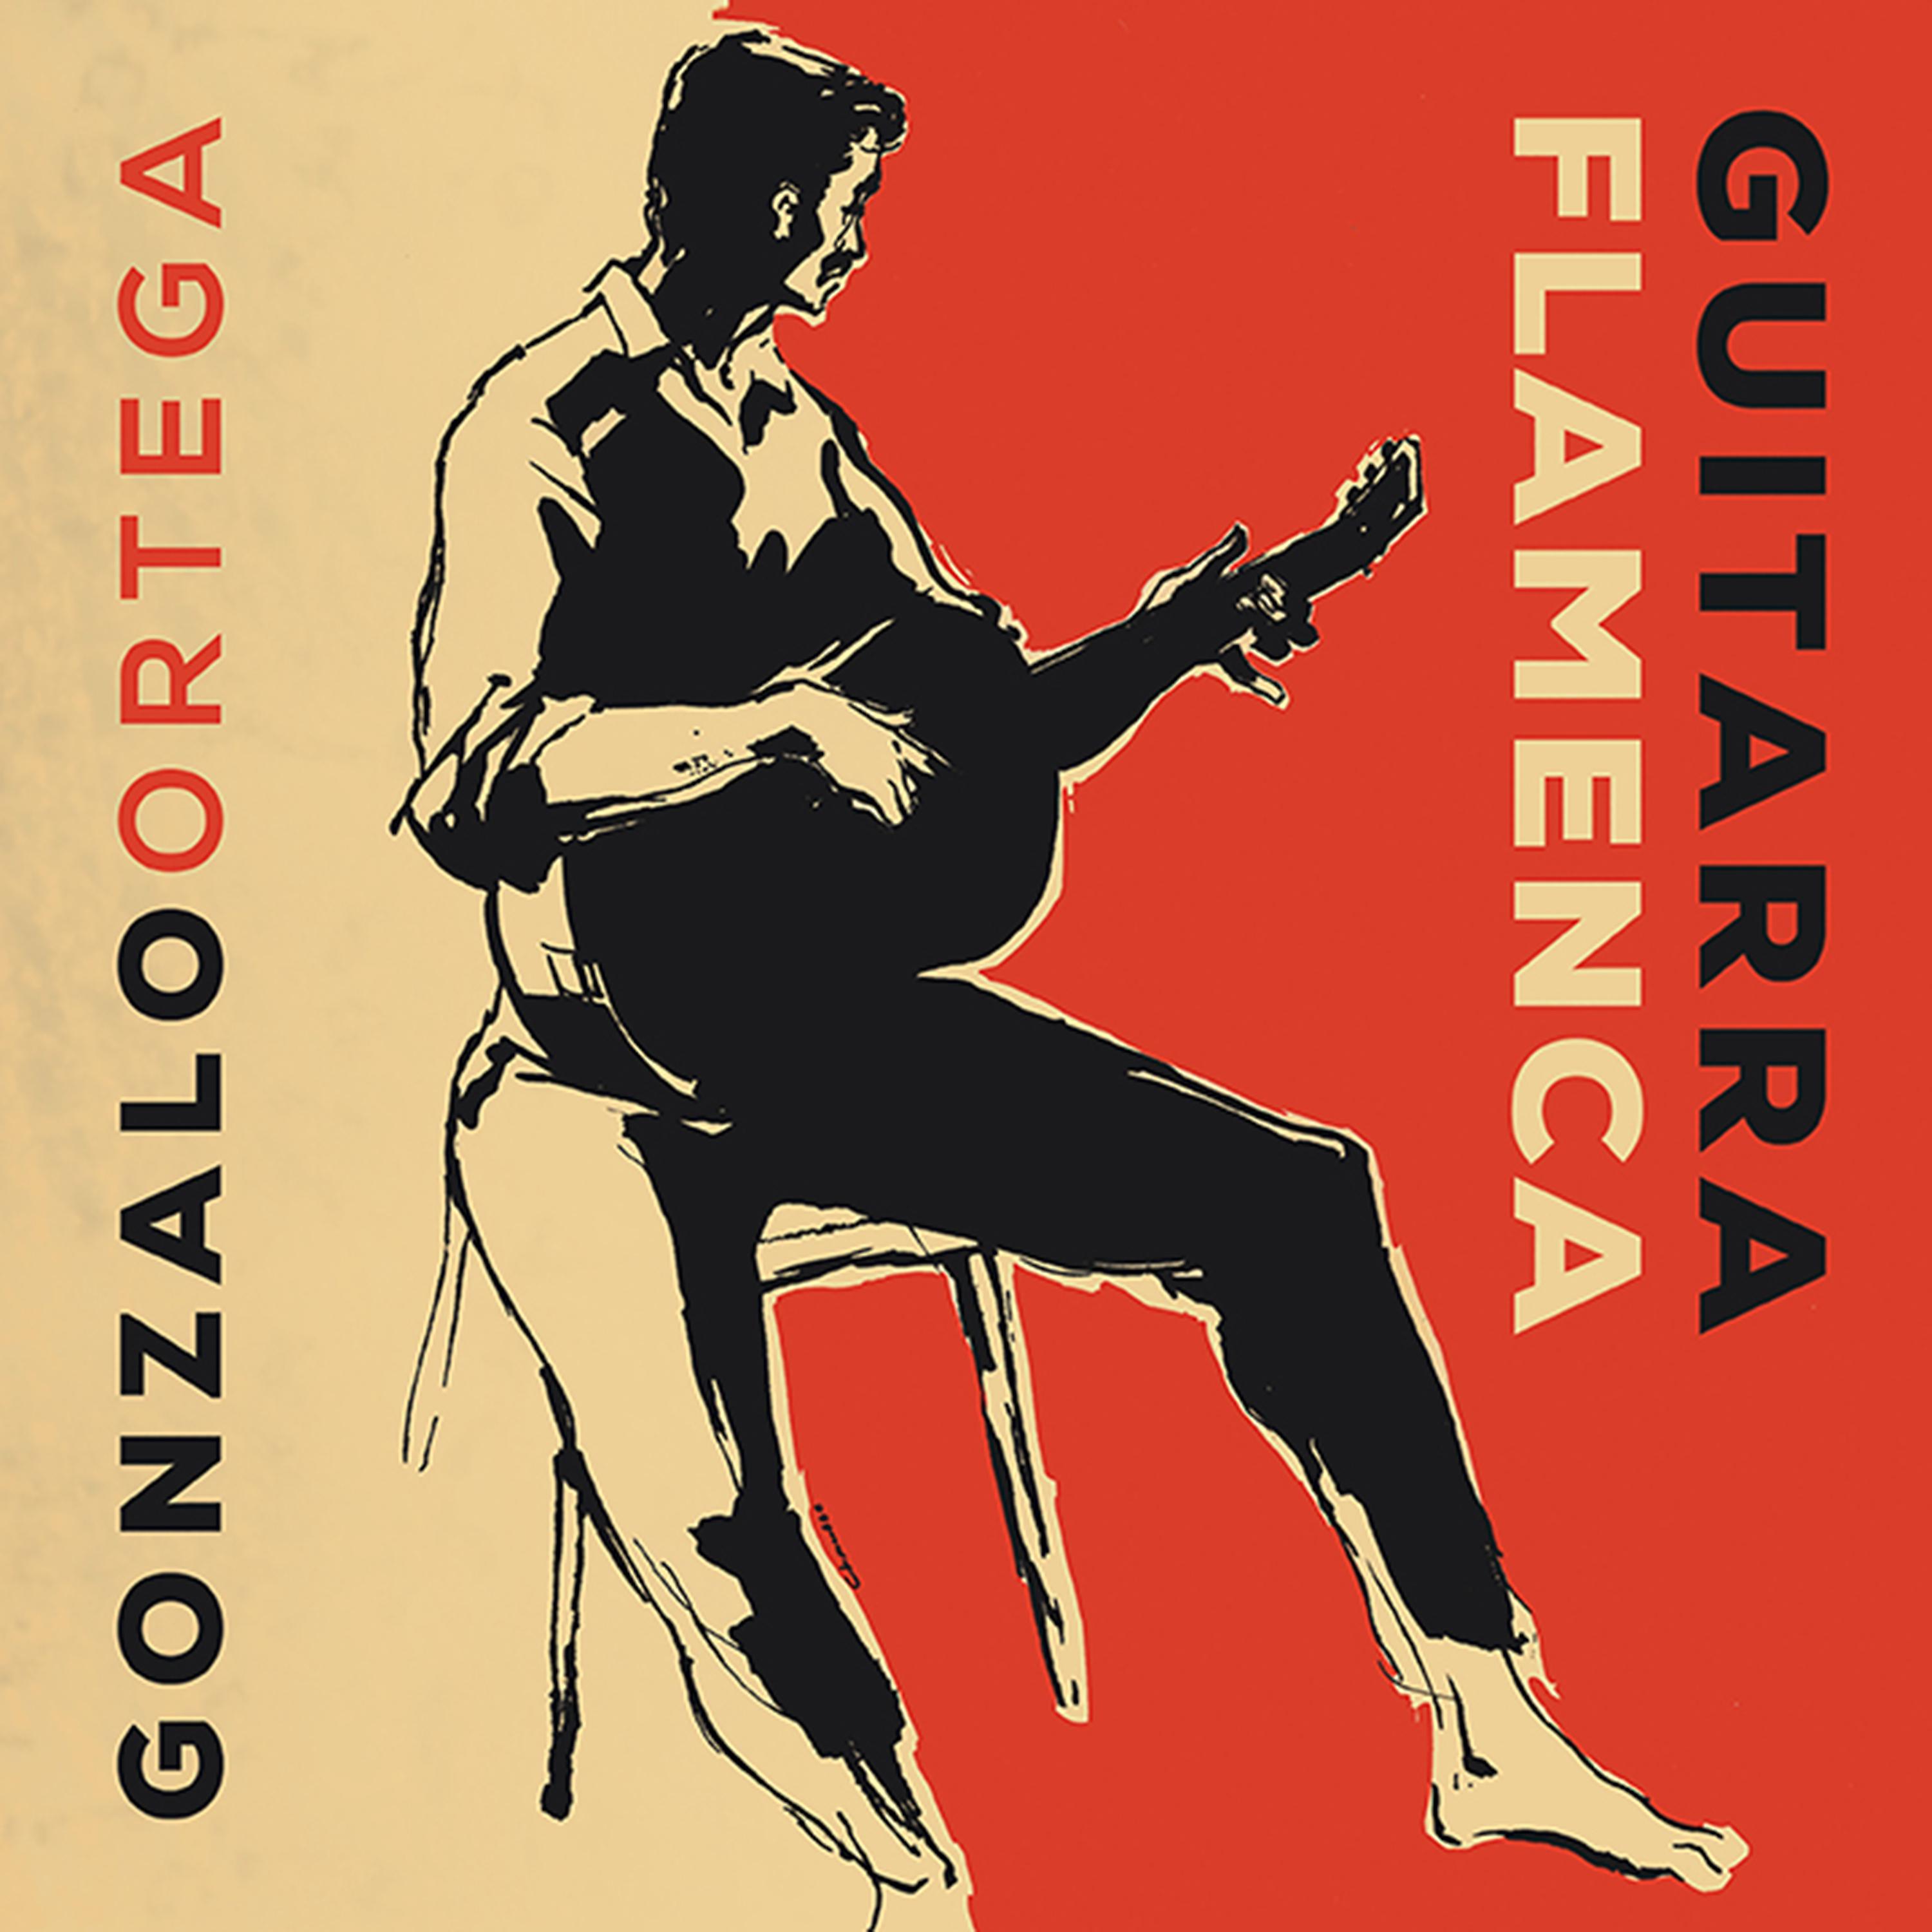 Постер альбома Guitarra Flamenca